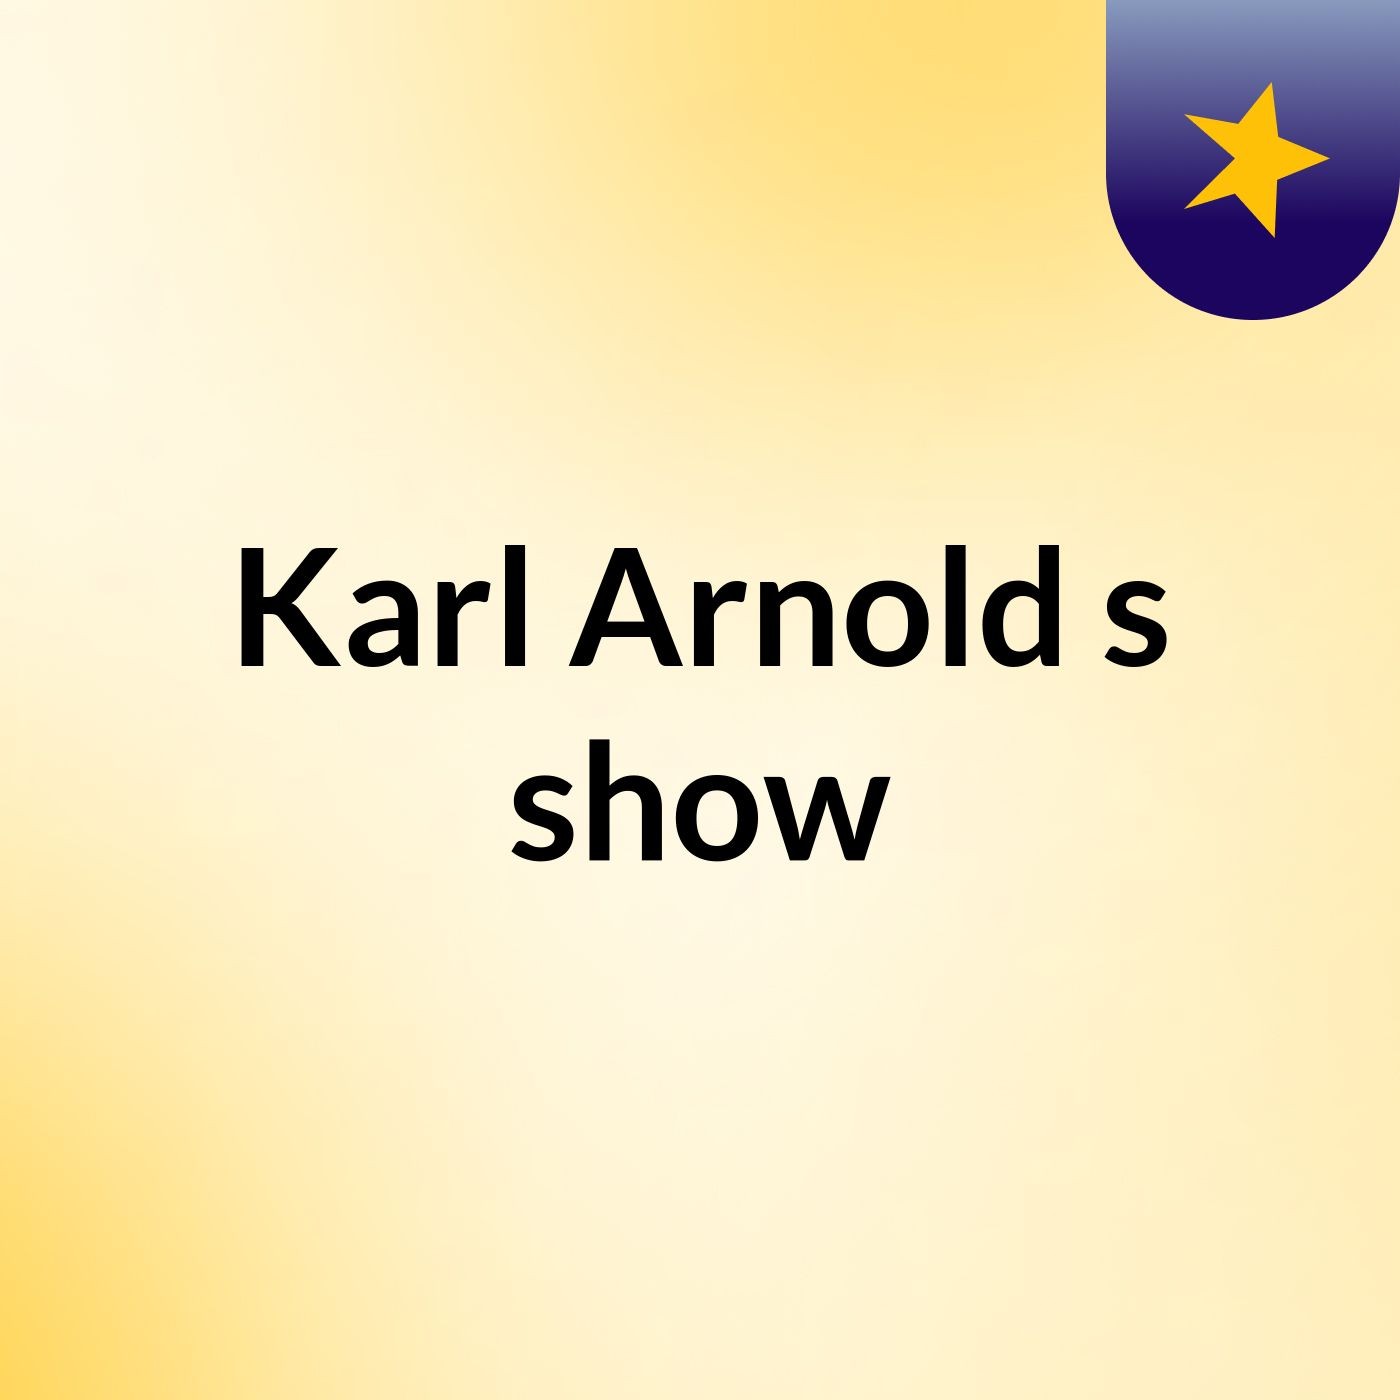 Karl Arnold's show